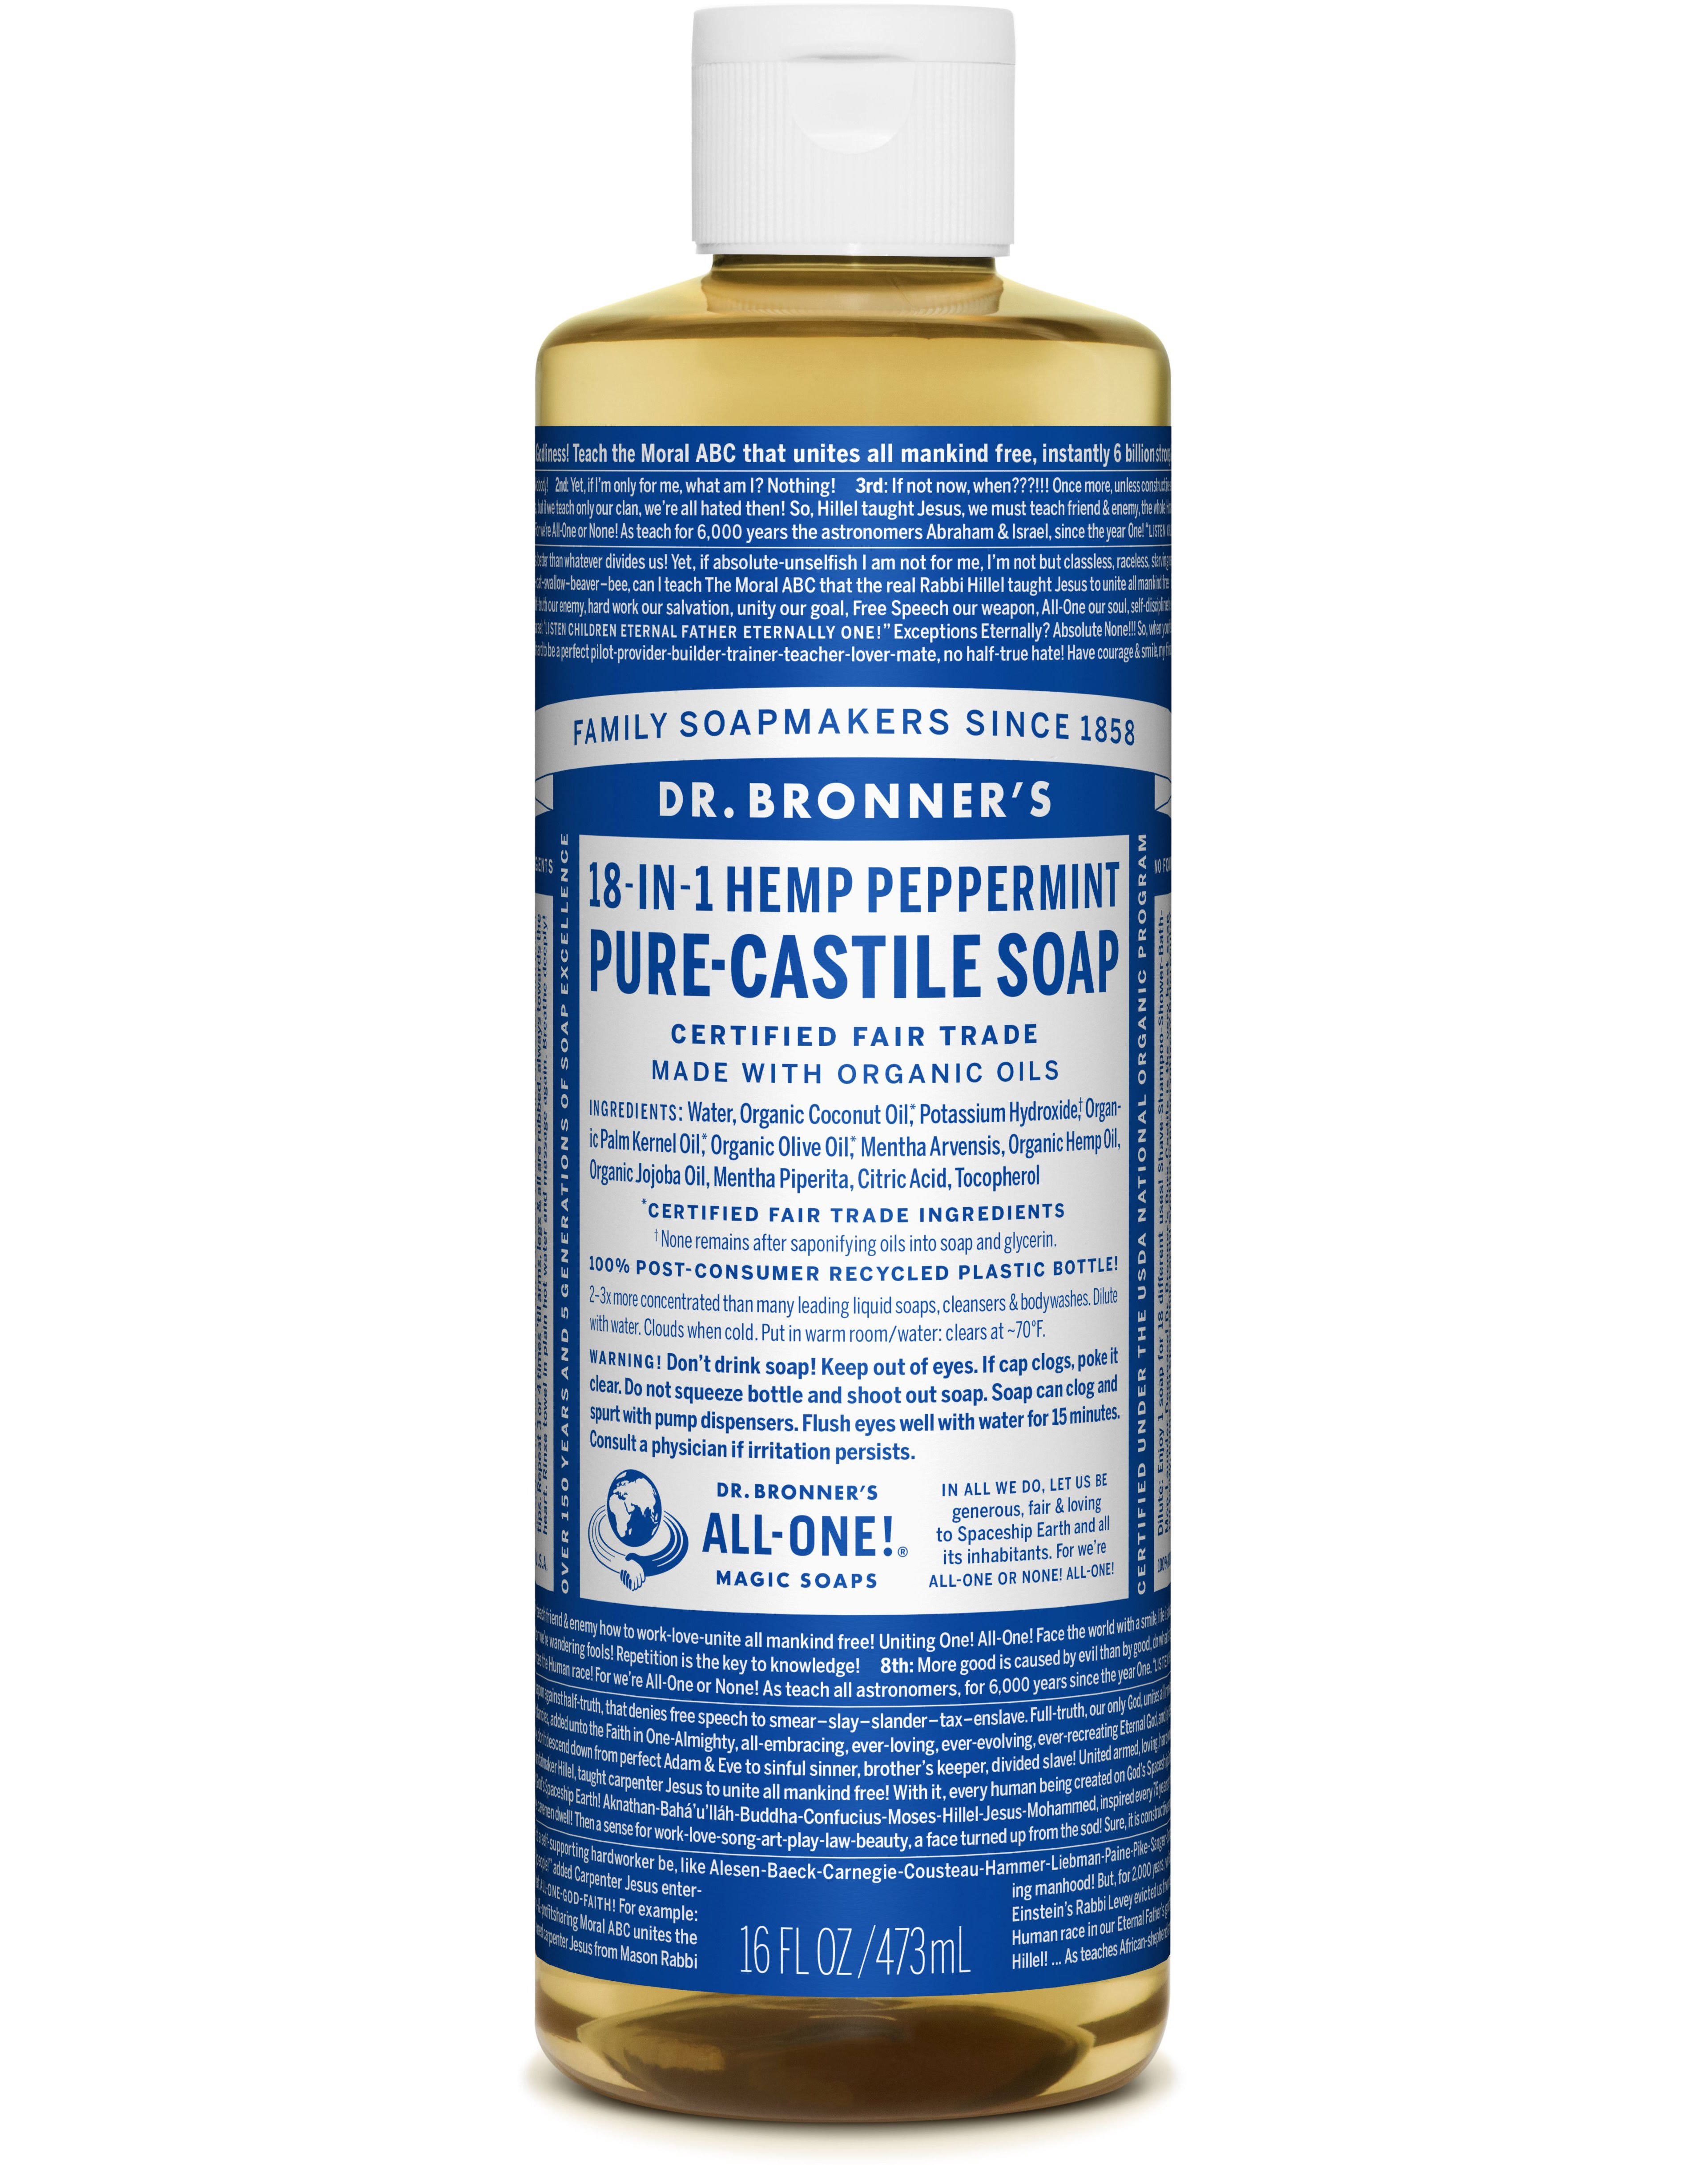 Dr. Bronner's Classic Pure-Castile Soap - Peppermint